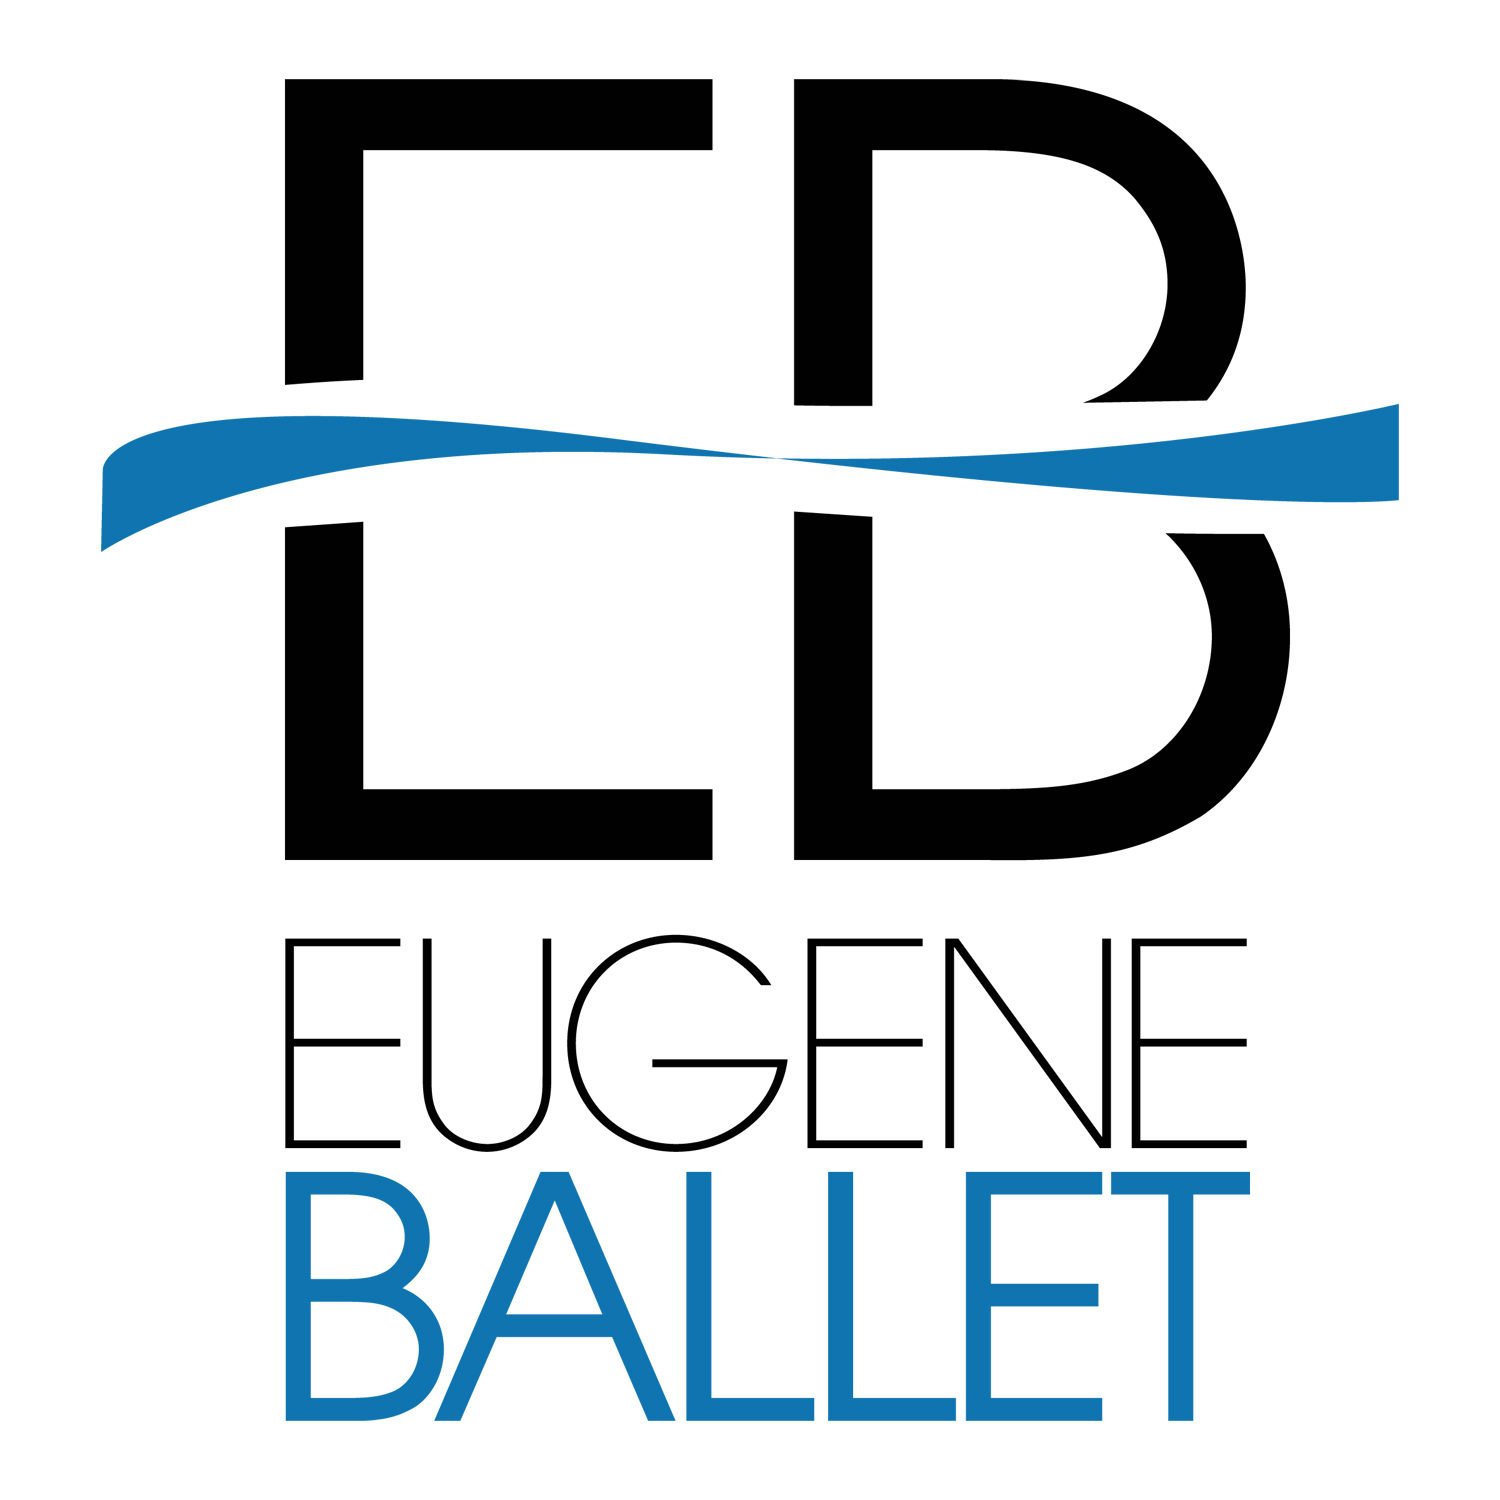 Eugene Ballet Create Perform Educate Inspire Through Dance